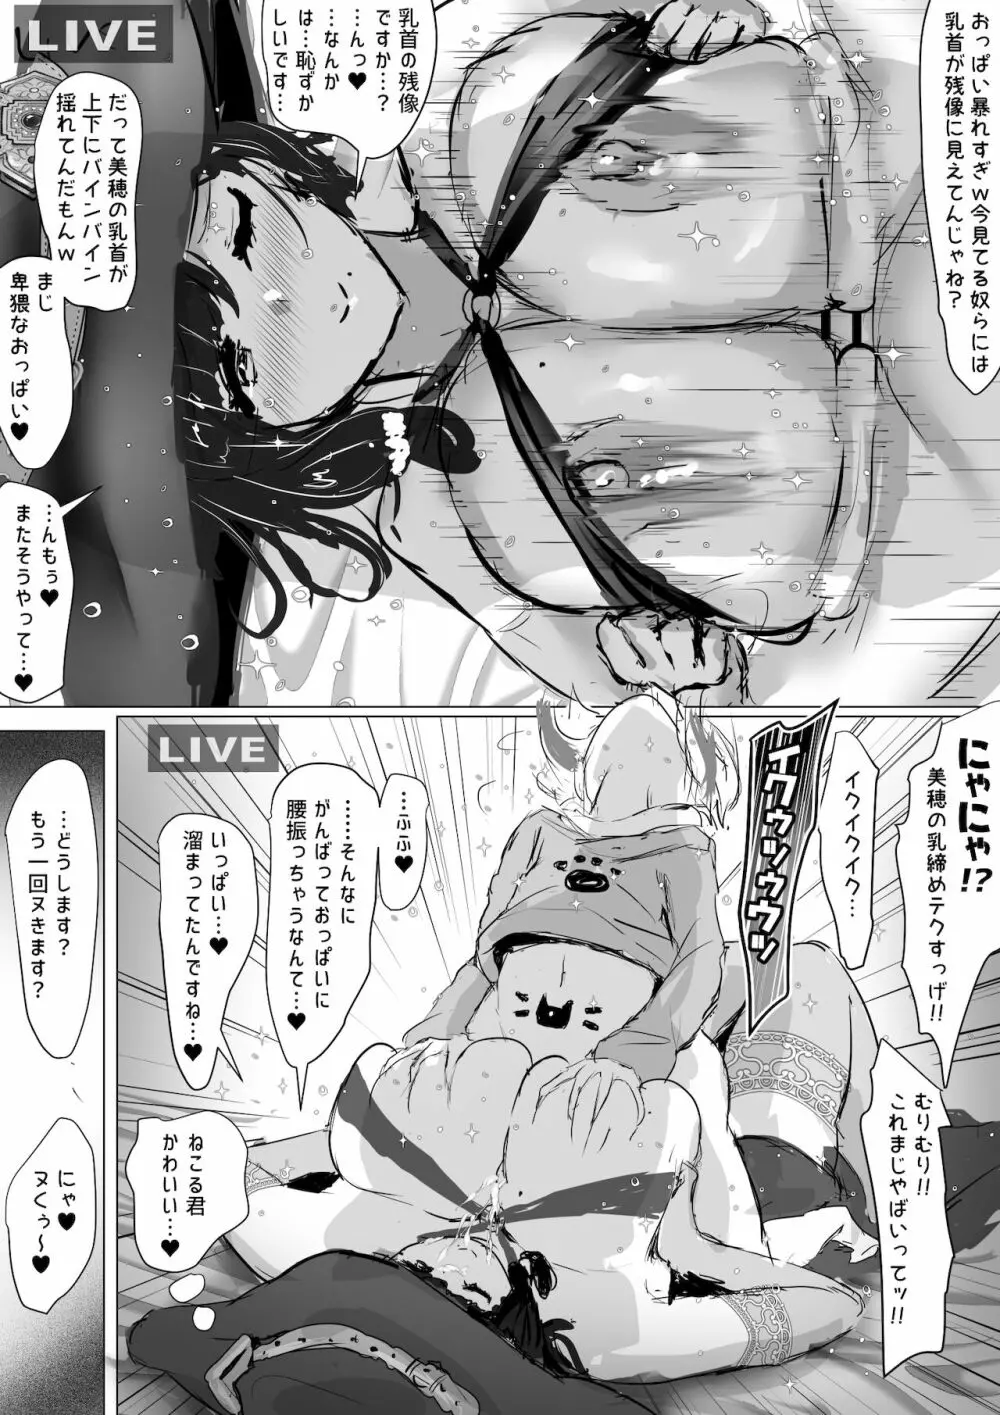 [Fuzume] オタクな妻(絵師)がヤリチン配信者に寝取られる話 オフパコ 6-9 21ページ